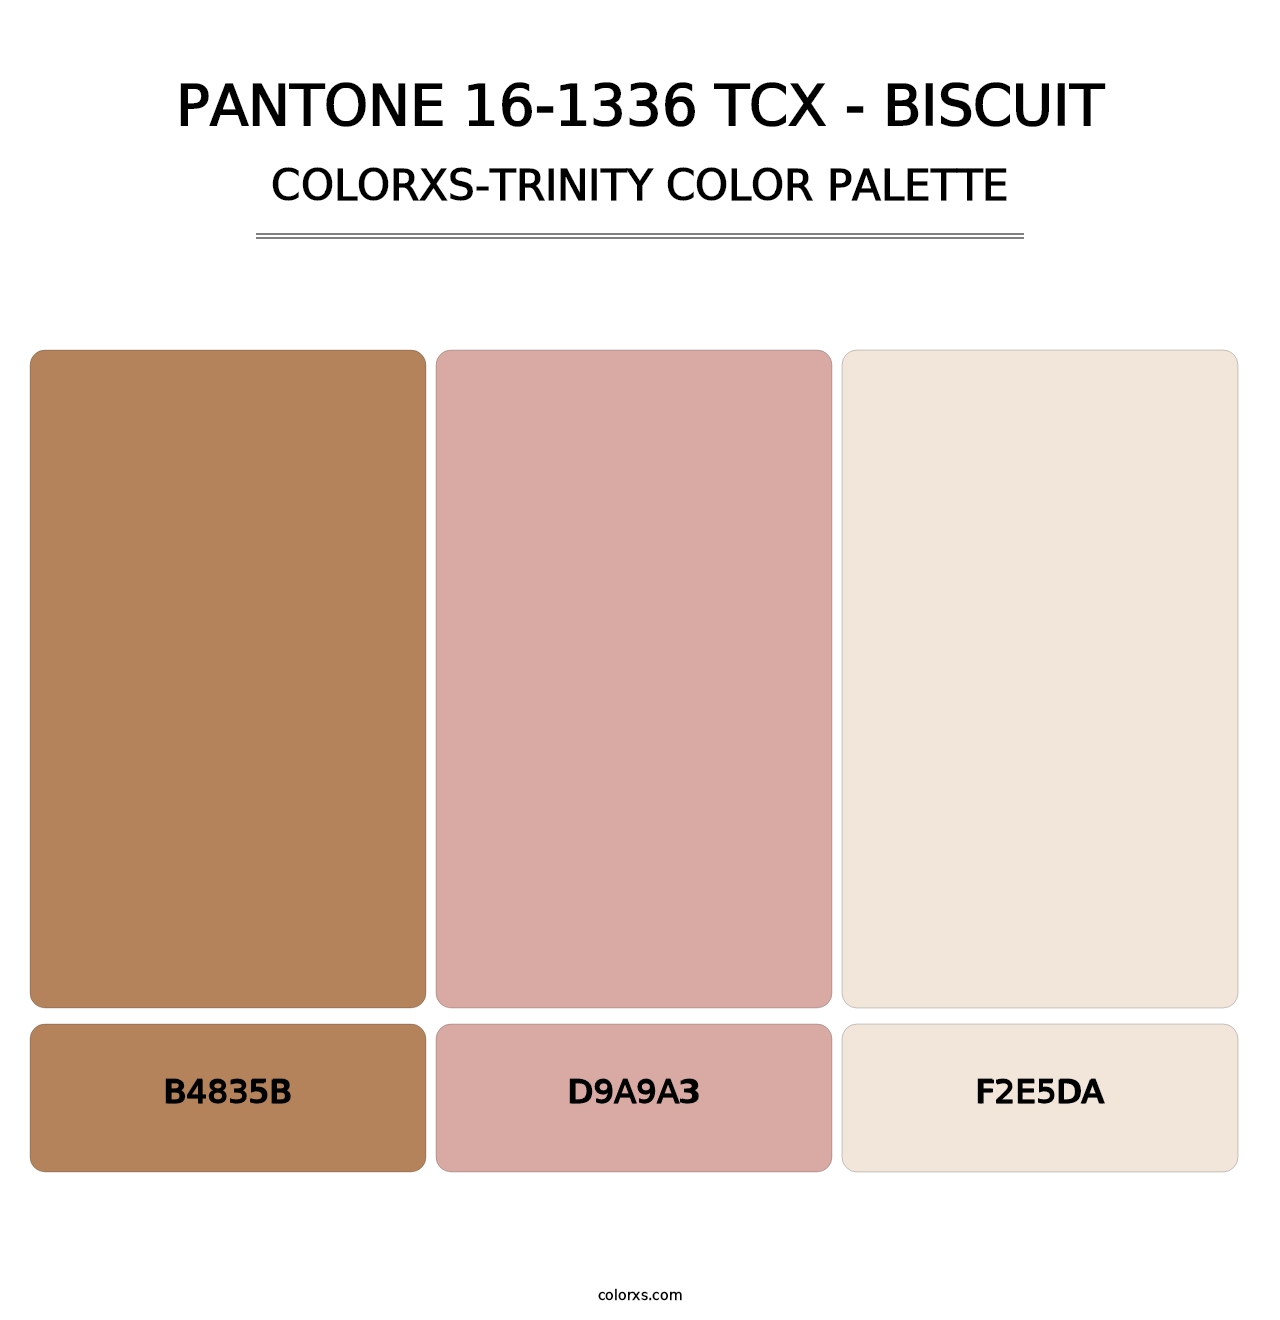 PANTONE 16-1336 TCX - Biscuit - Colorxs Trinity Palette